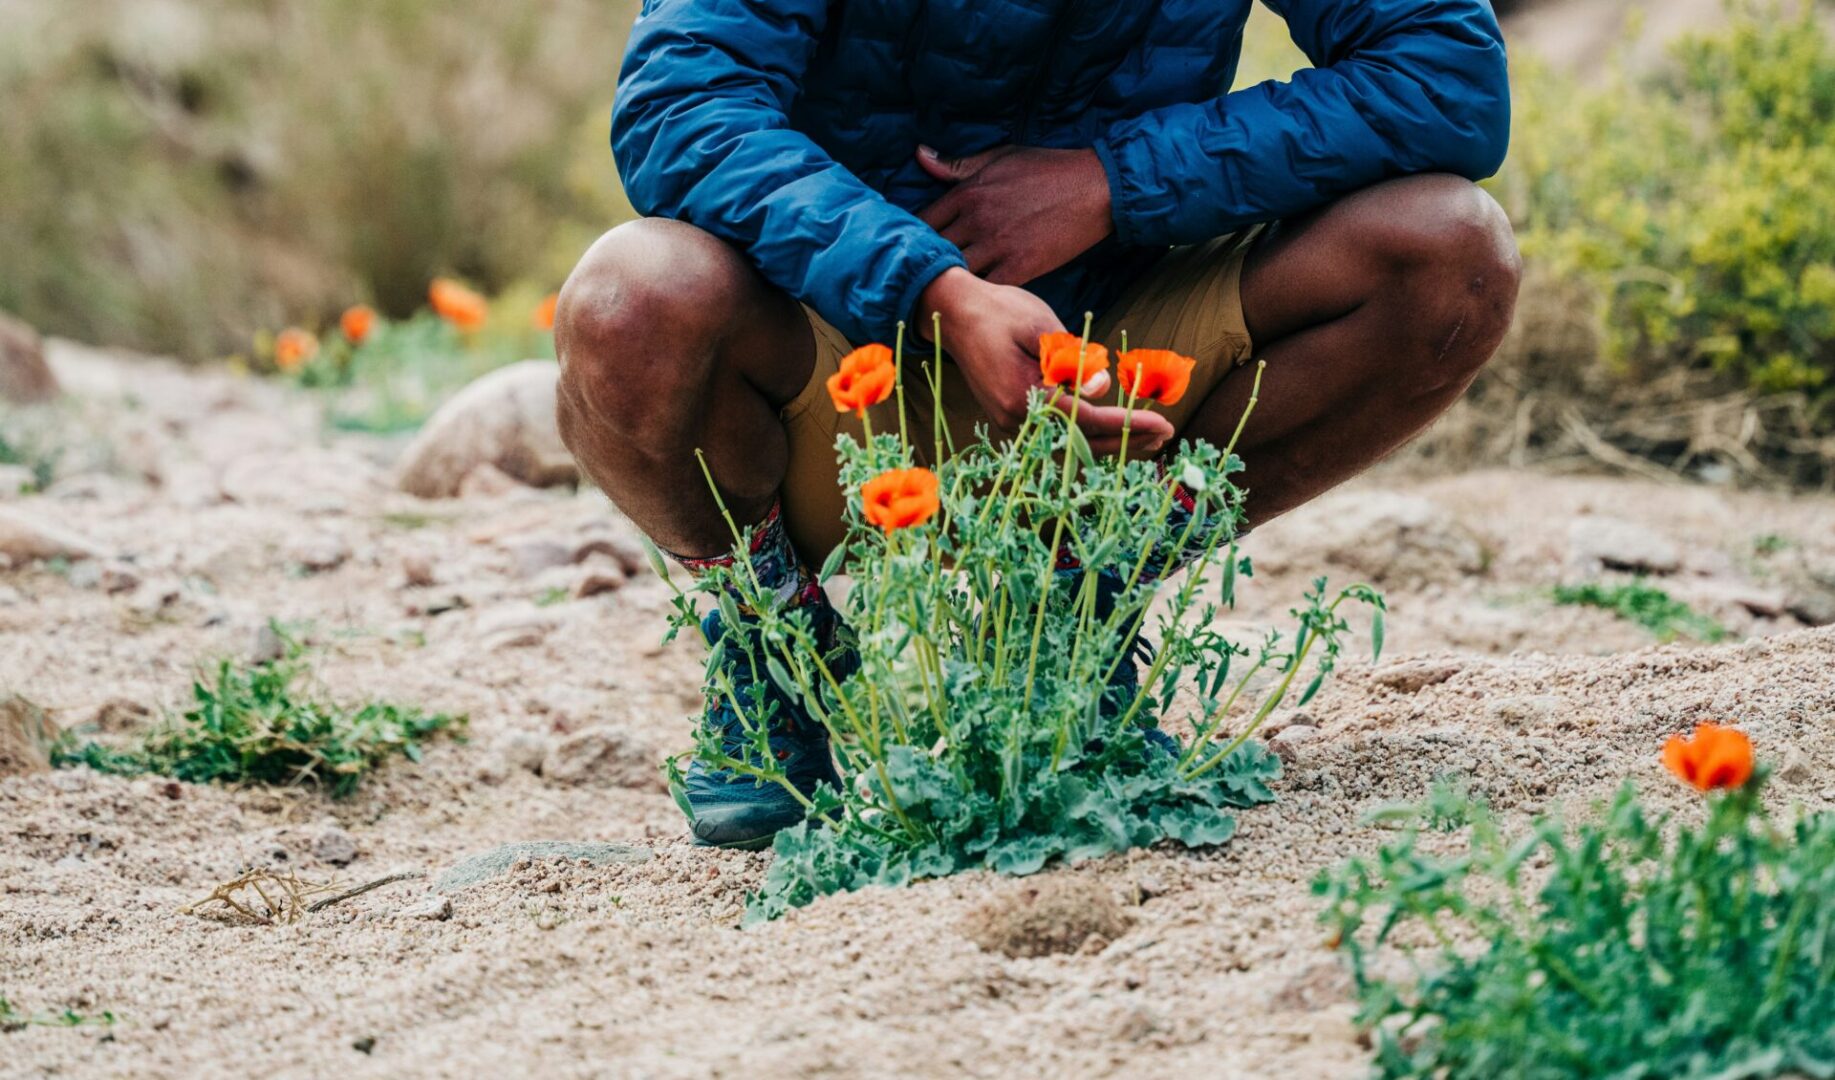 Man crouching next to orange flowers growing in dirt